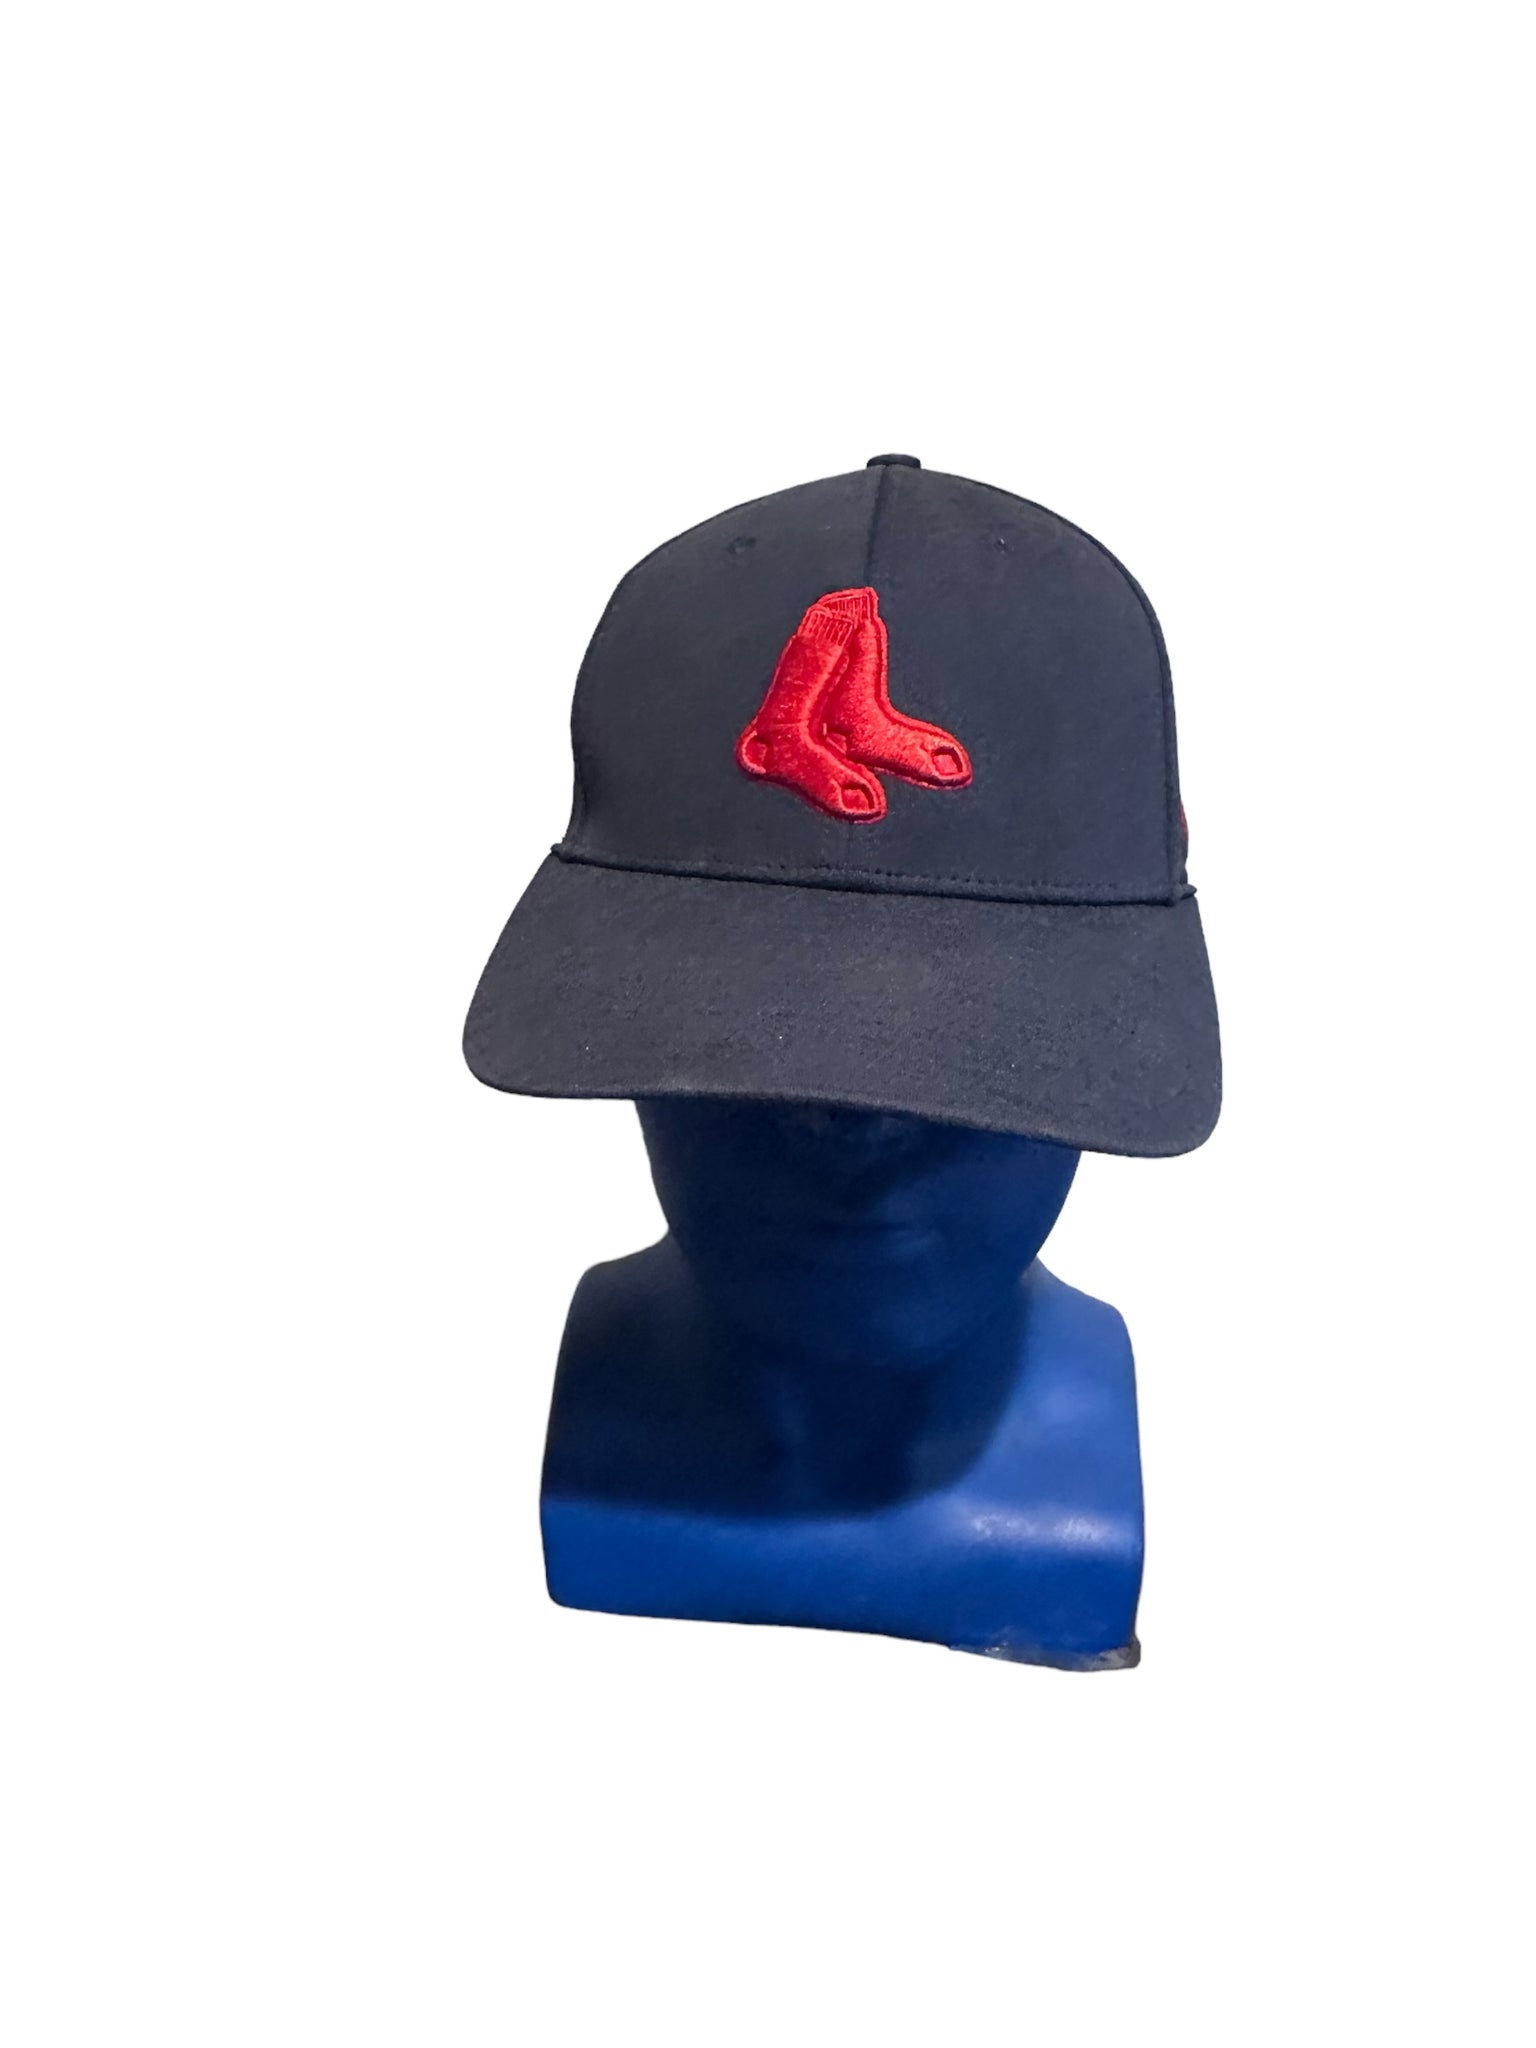 UNDER ARMOUR THREADBORNE MLB BOSTON REDSOX BASEBALL CAP ADULT HAT adjustable strap